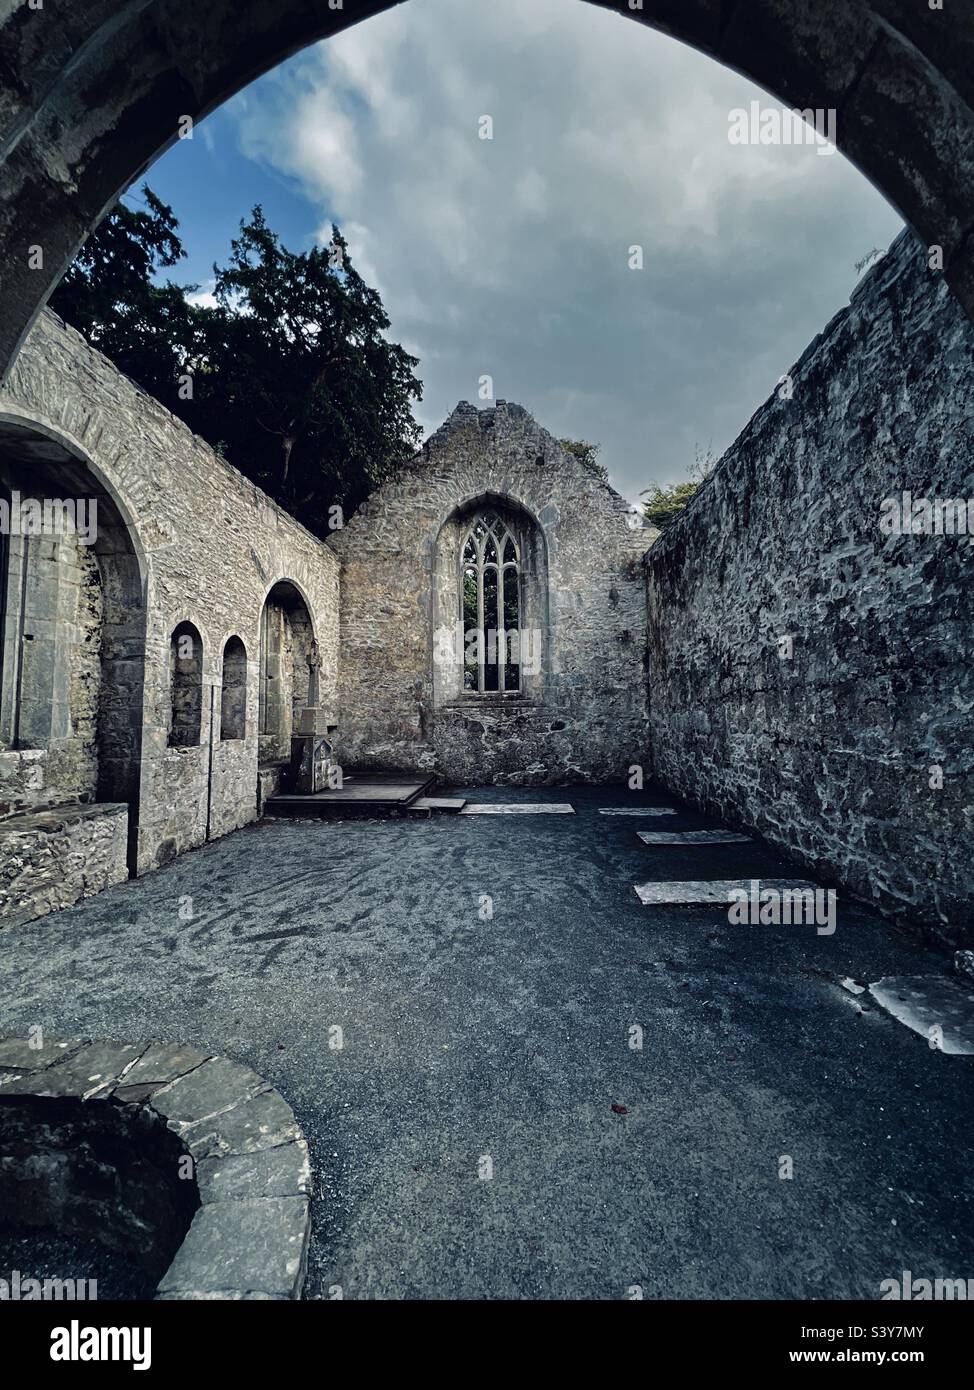 Abandoned decaying ruins of Muckross Abbey, county Kerry, Killarney, Ireland. Stock Photo